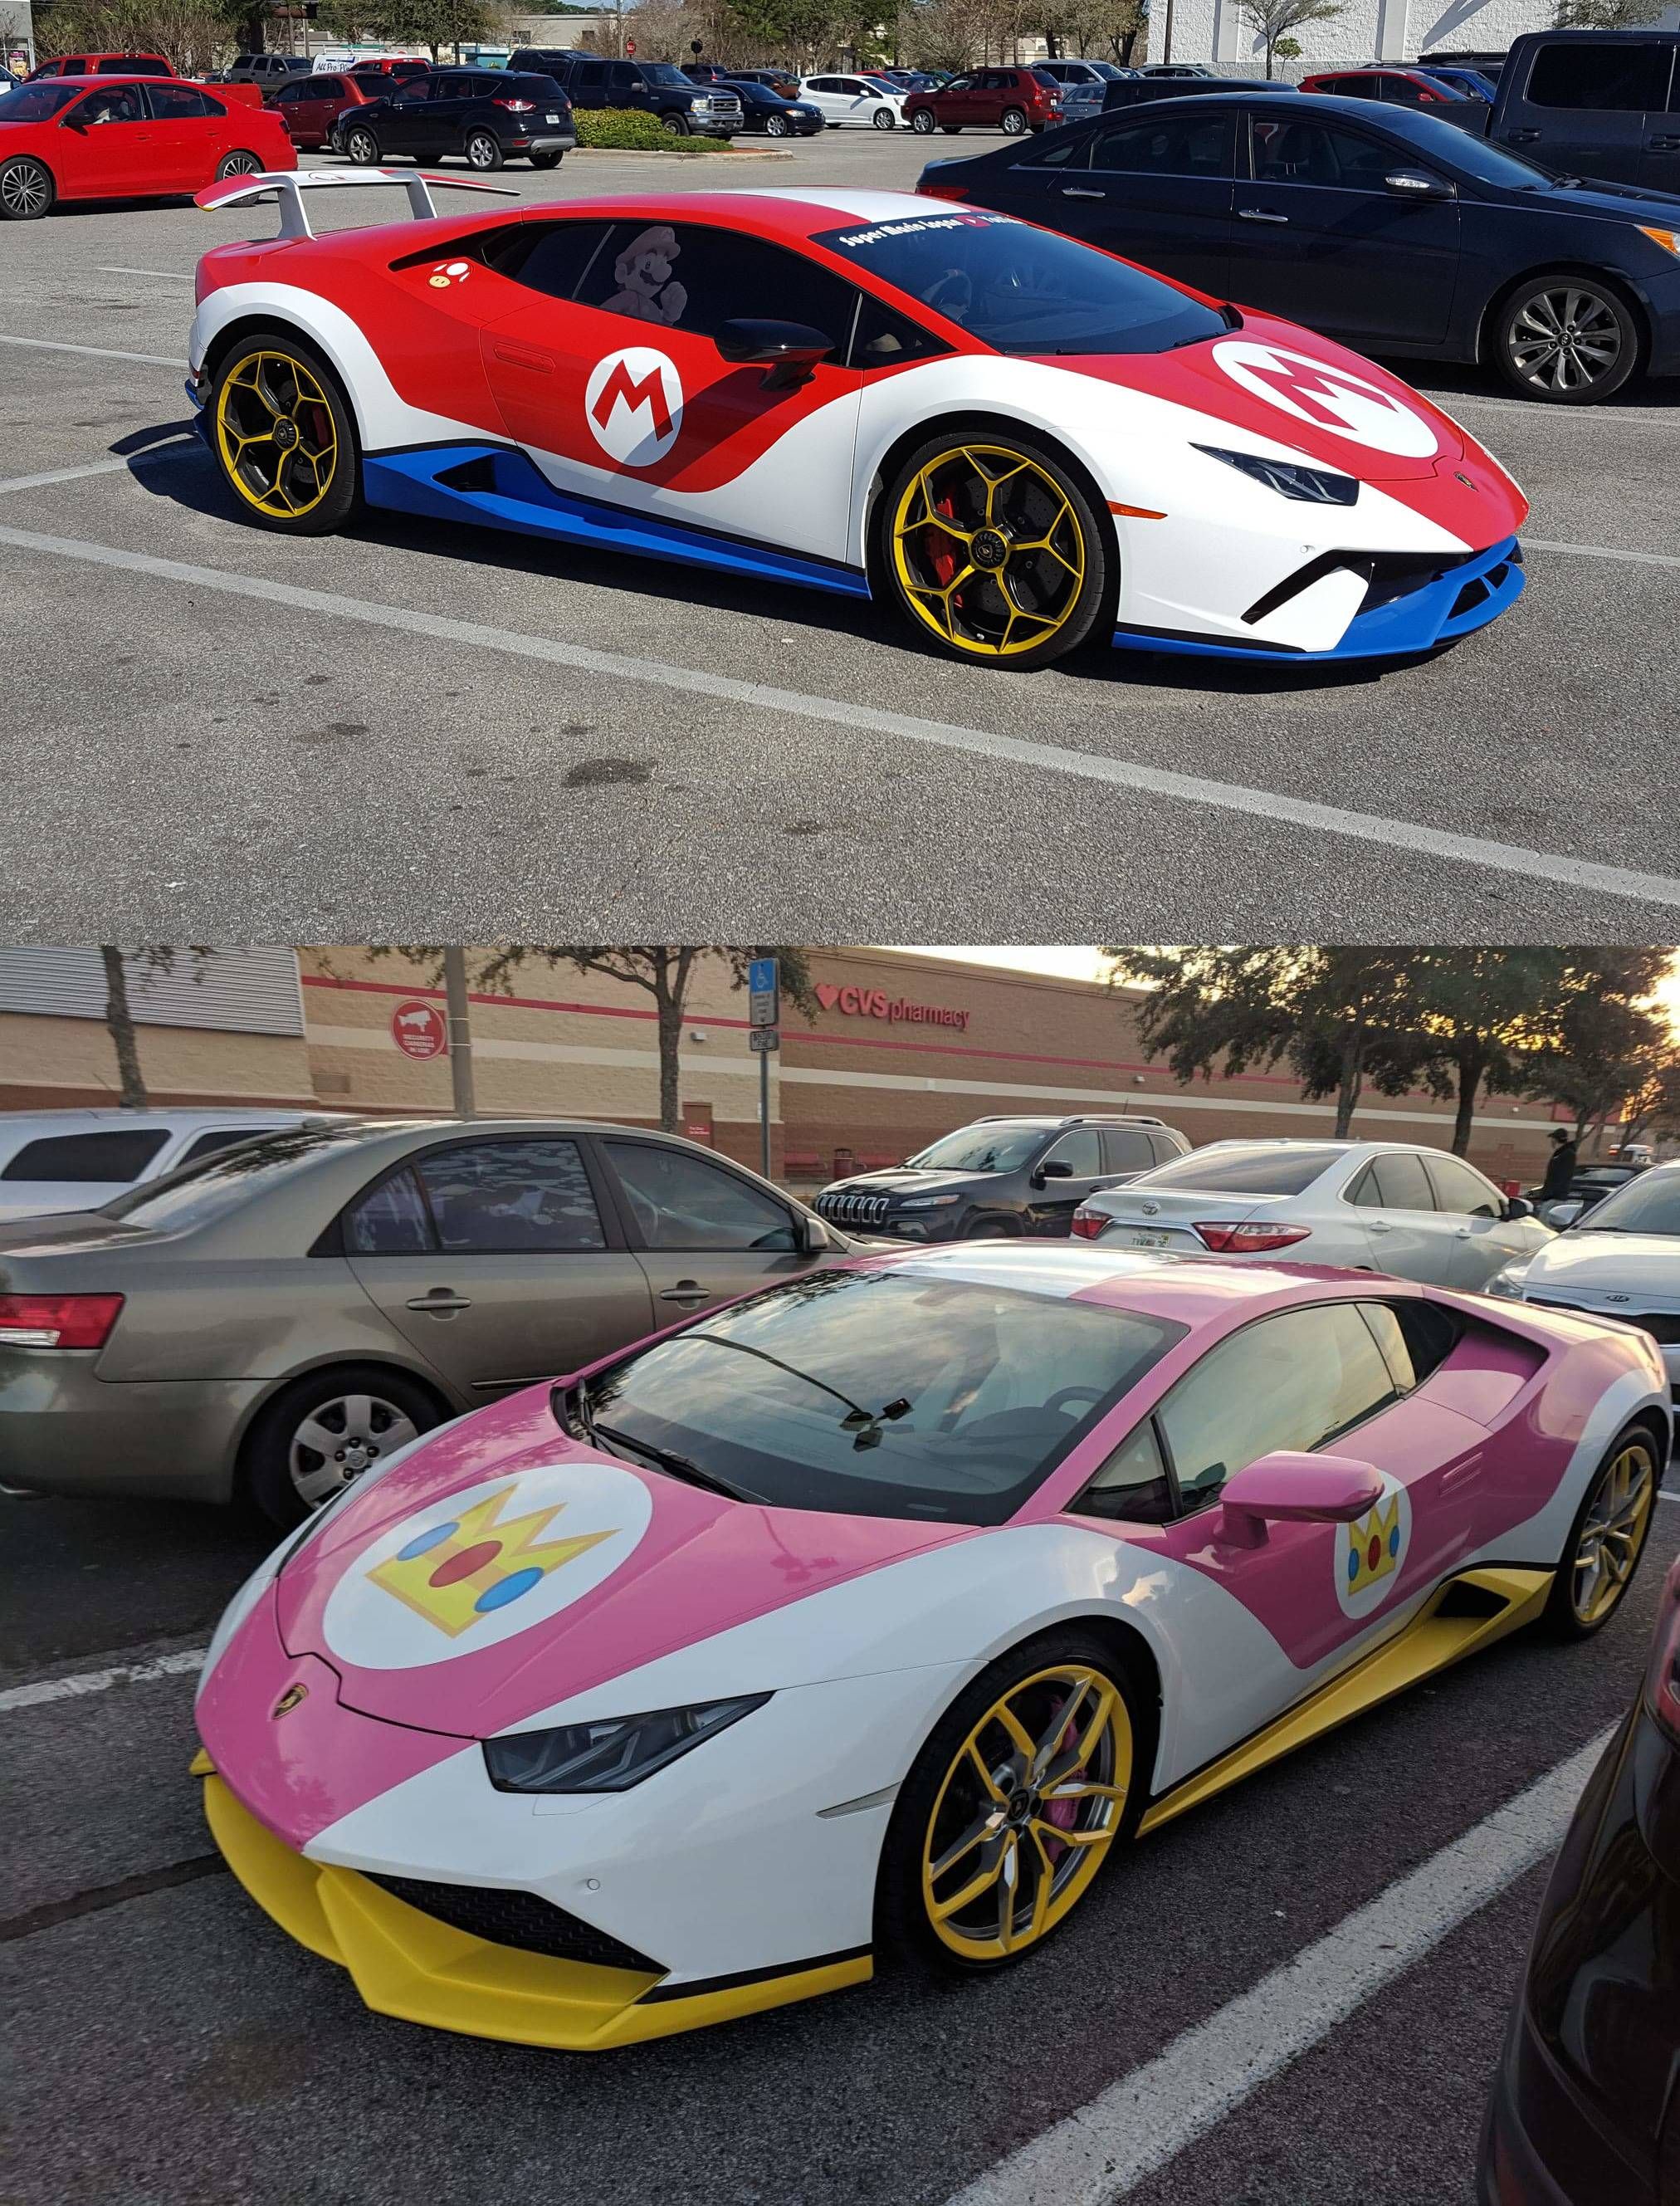 These Mario-themed Lamborghinis